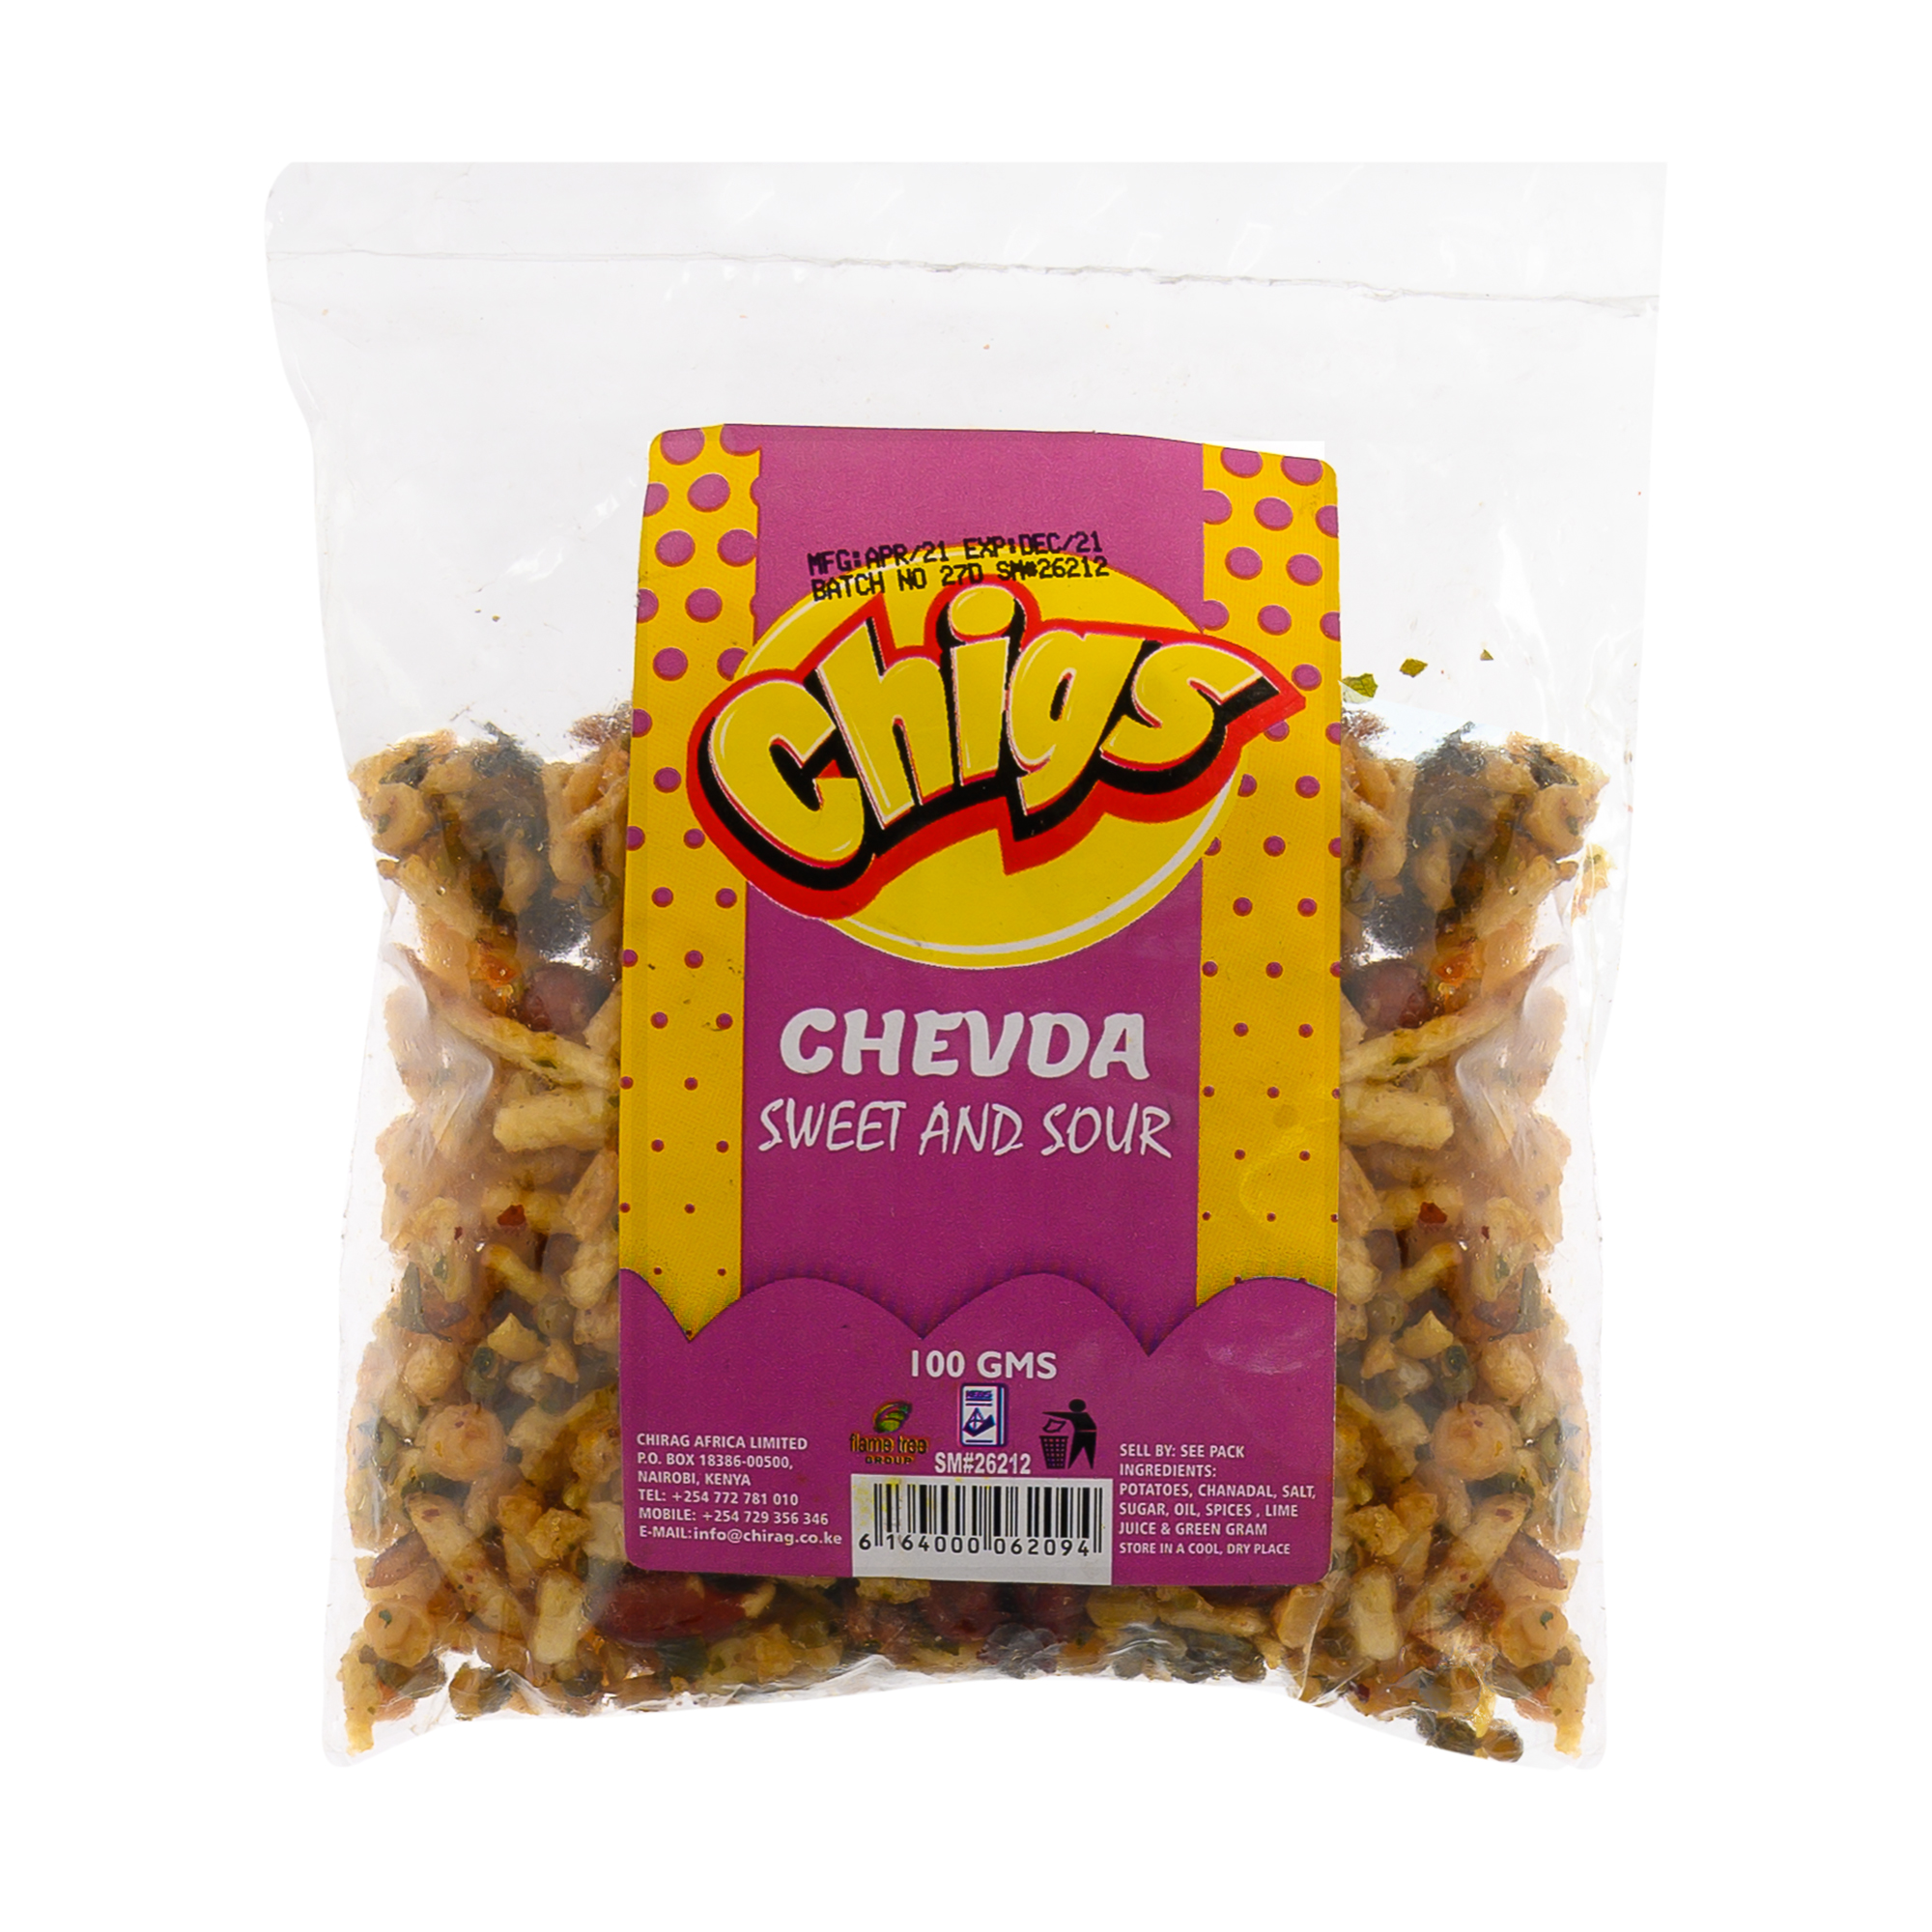 Chigs Chevda Sweet & Sour 100g